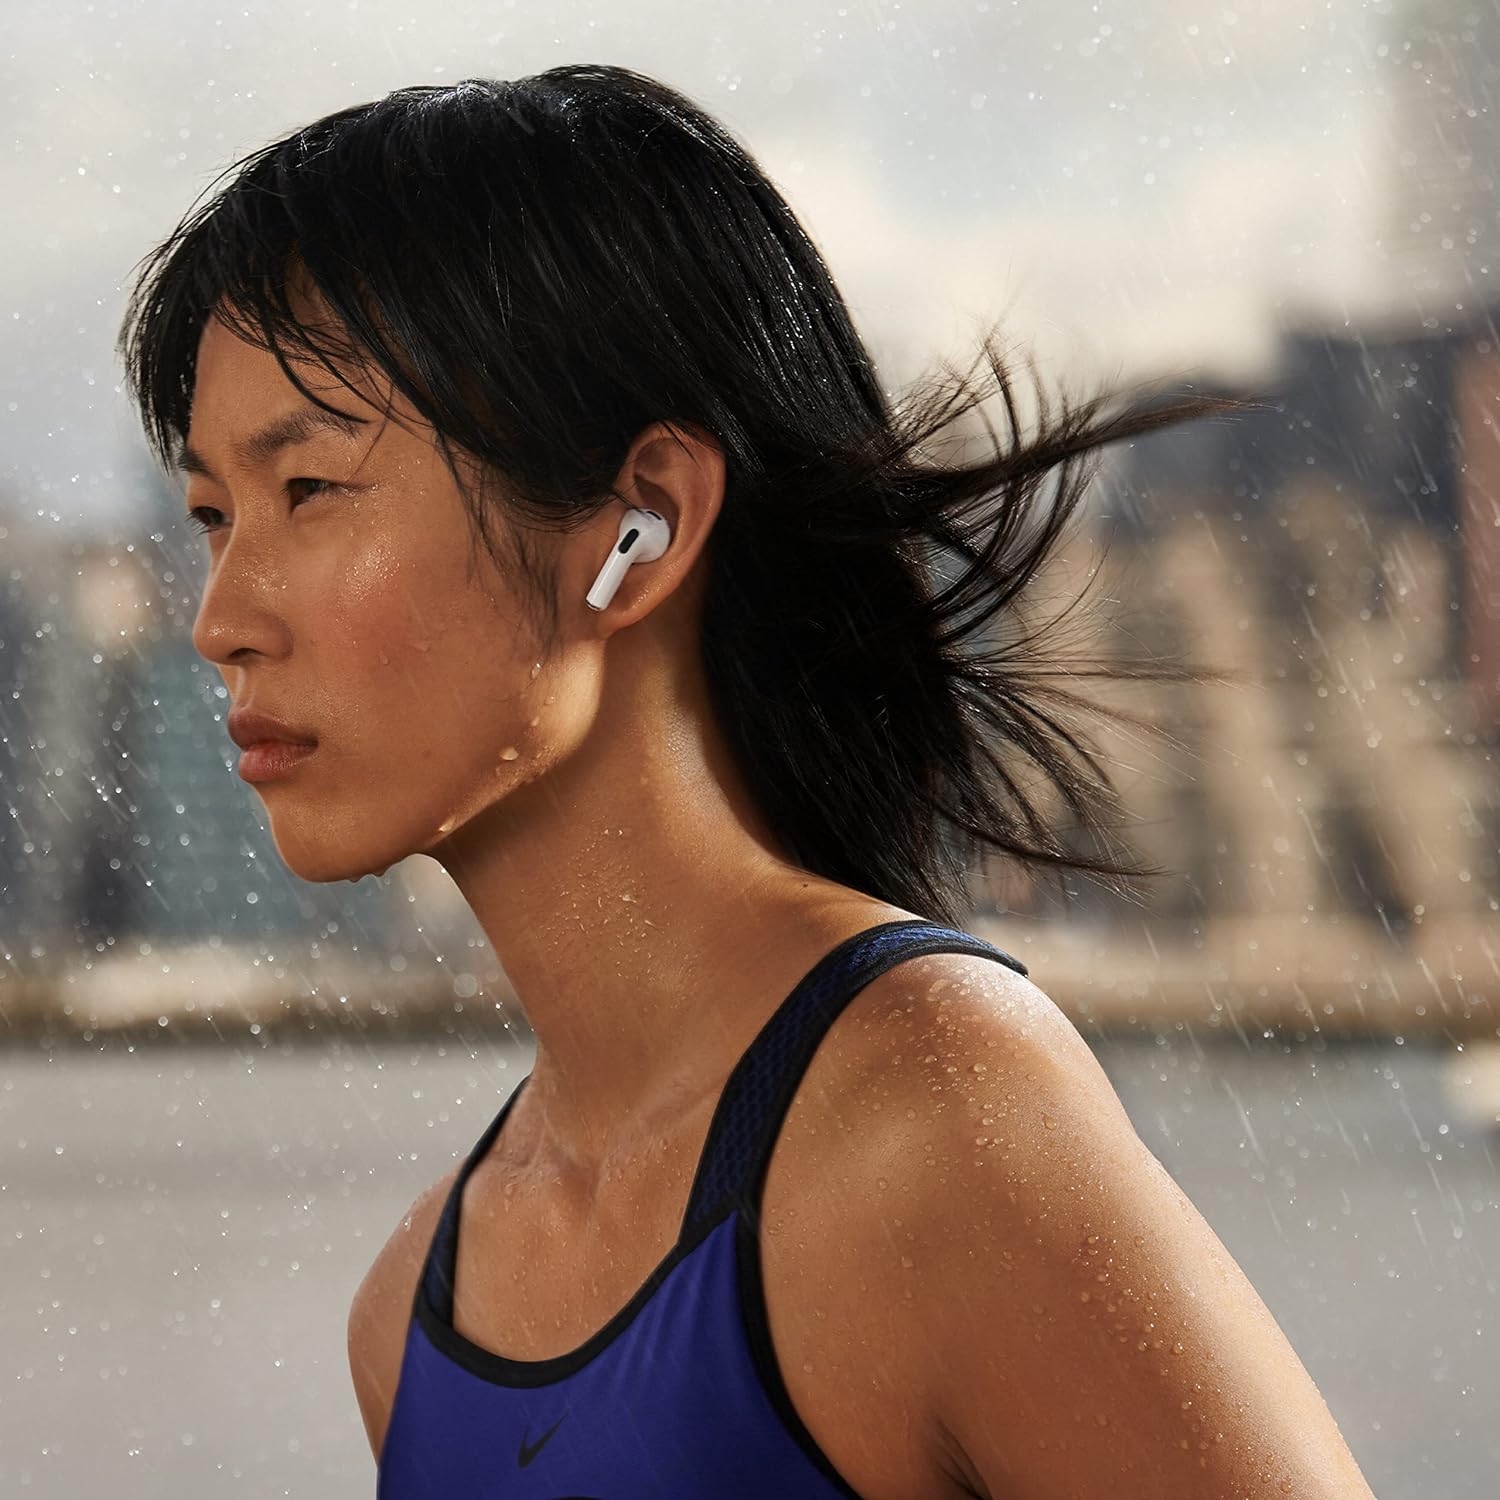 5 best headphones for fitness